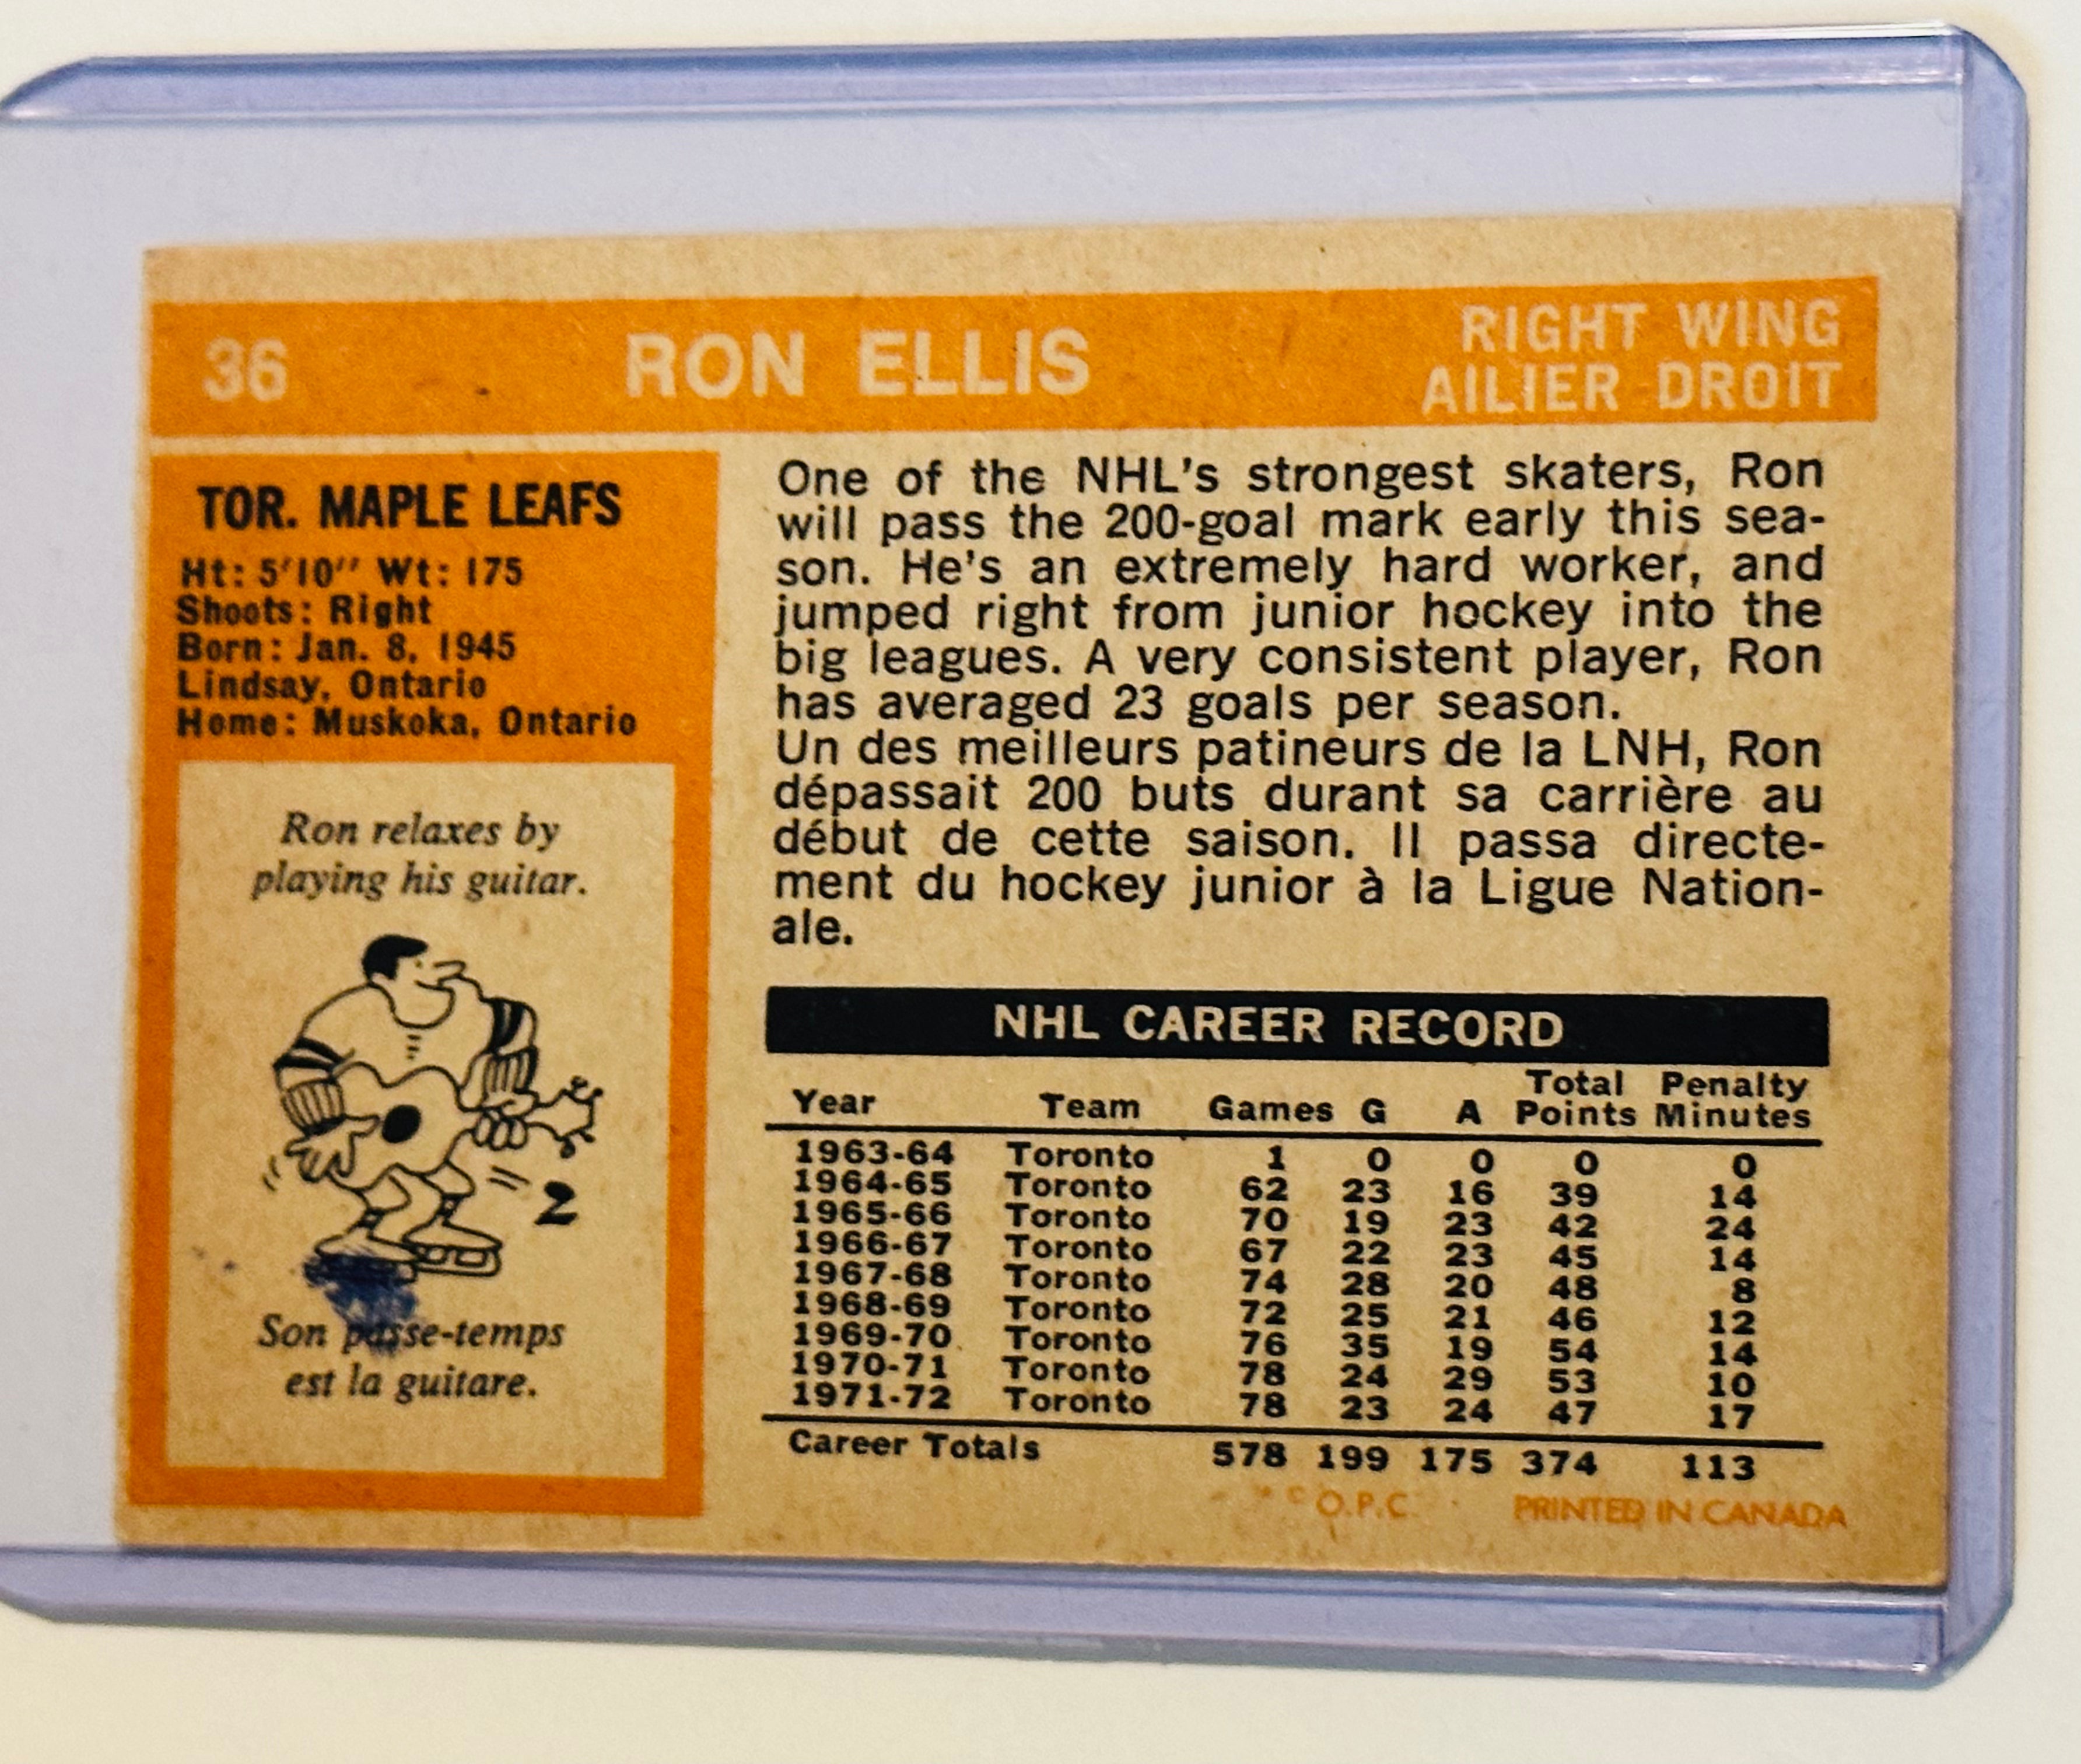 Toronto Maple Leafs Ron Ellis signed card with COA